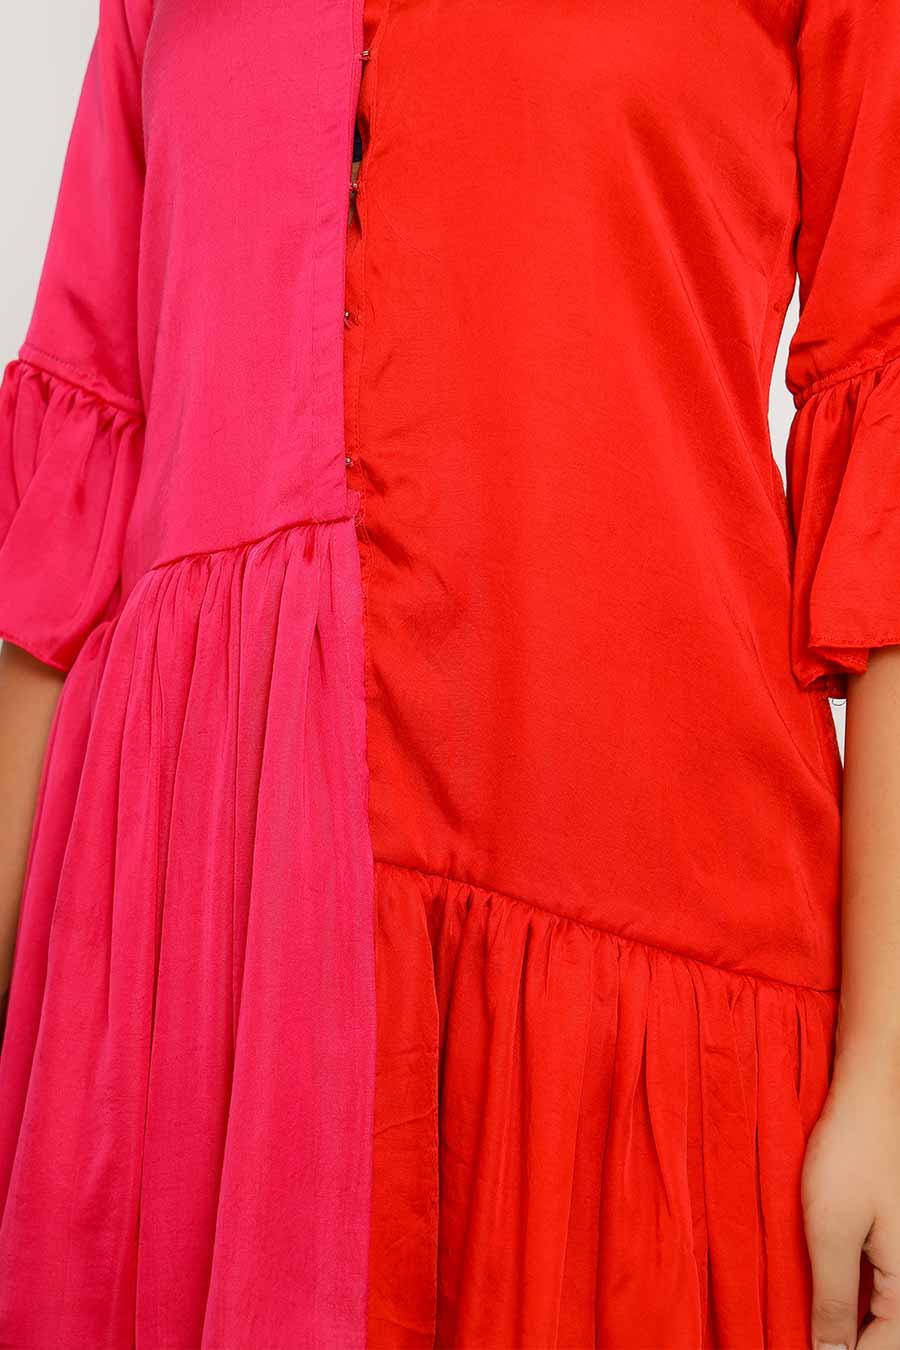 Red & Pink Half & Half Short Dress